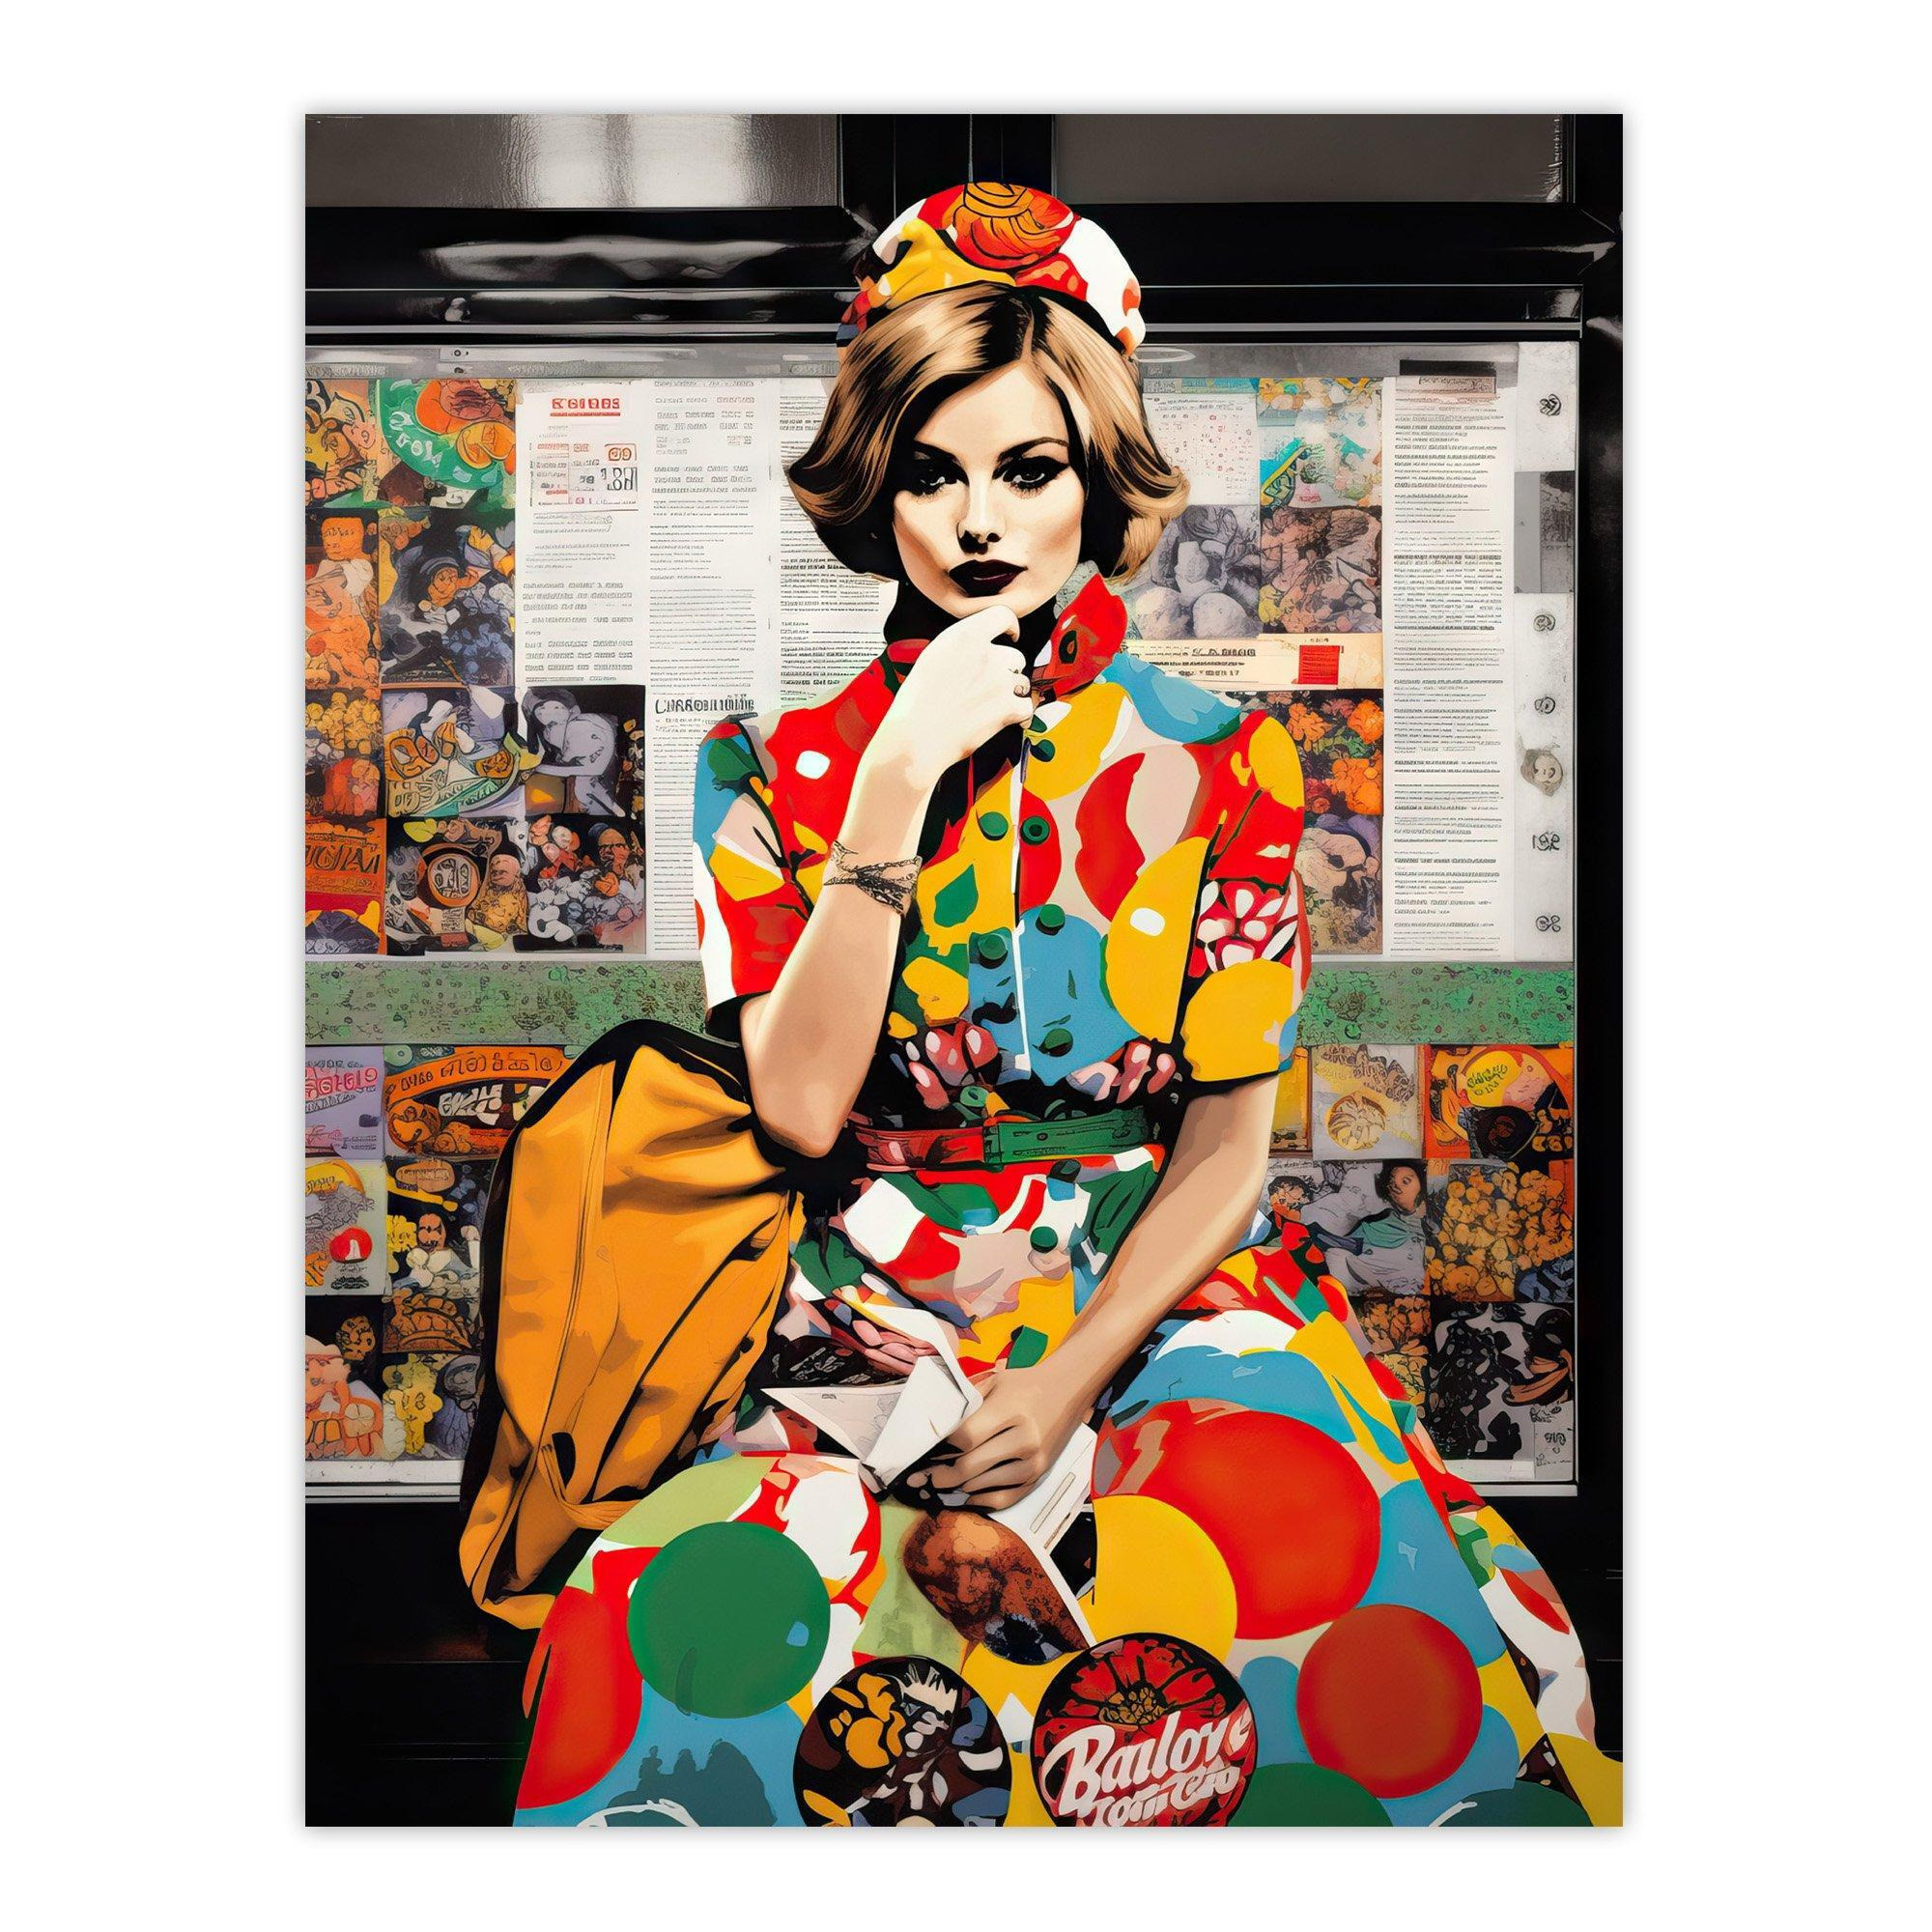 Vintage Meets Pop Art Fashion Advert Collage Artwork Woman In Retro Pattern Dress Bus Stop Train Vibrant Colourful Bold Pop Art Modern Painting Unframed Wall Art Print Poster Home Decor Premium - image 1